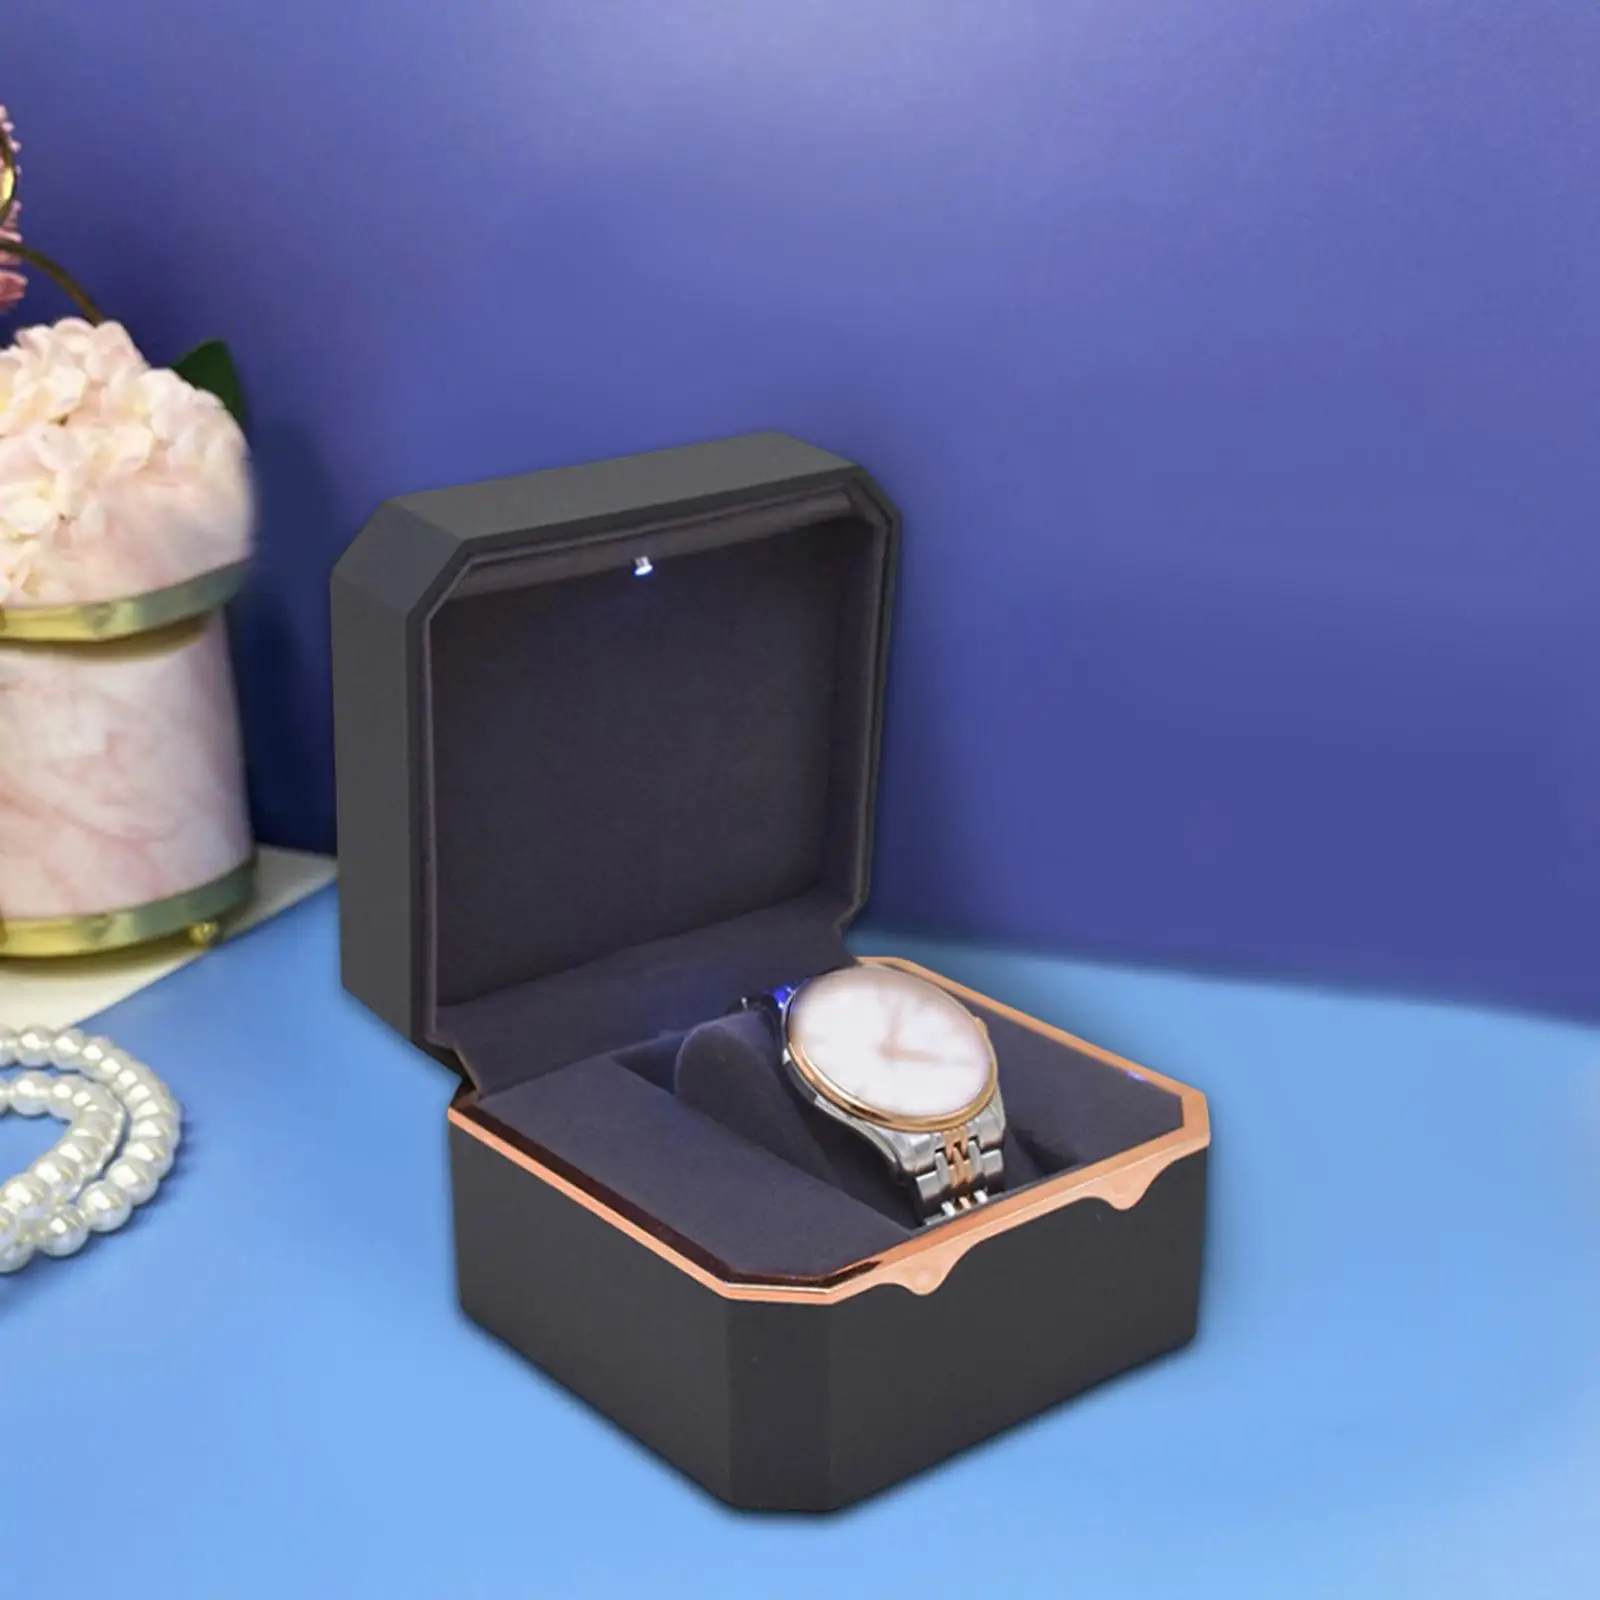 Watch Case with Light Single Watch Box Paint Storage Case Organizer Showcase for Birthday Gifts Valentines Day Women Men